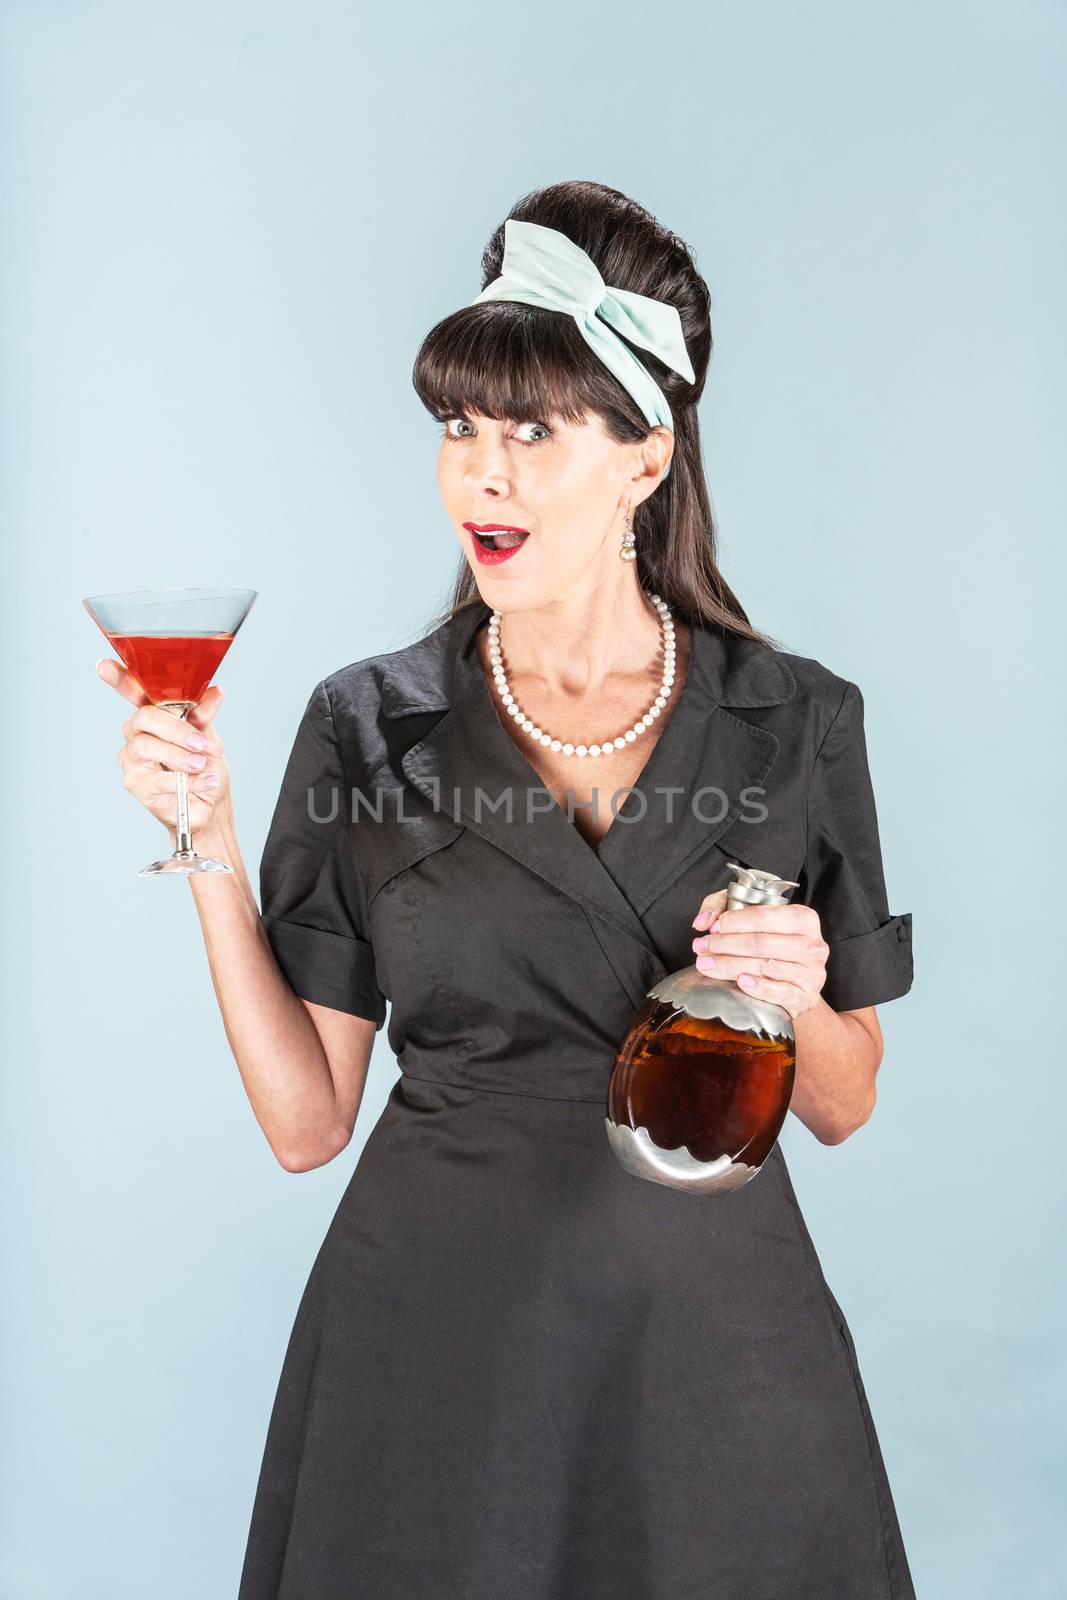 Retro Woman in Black Dress with Cosmopolitan by Creatista